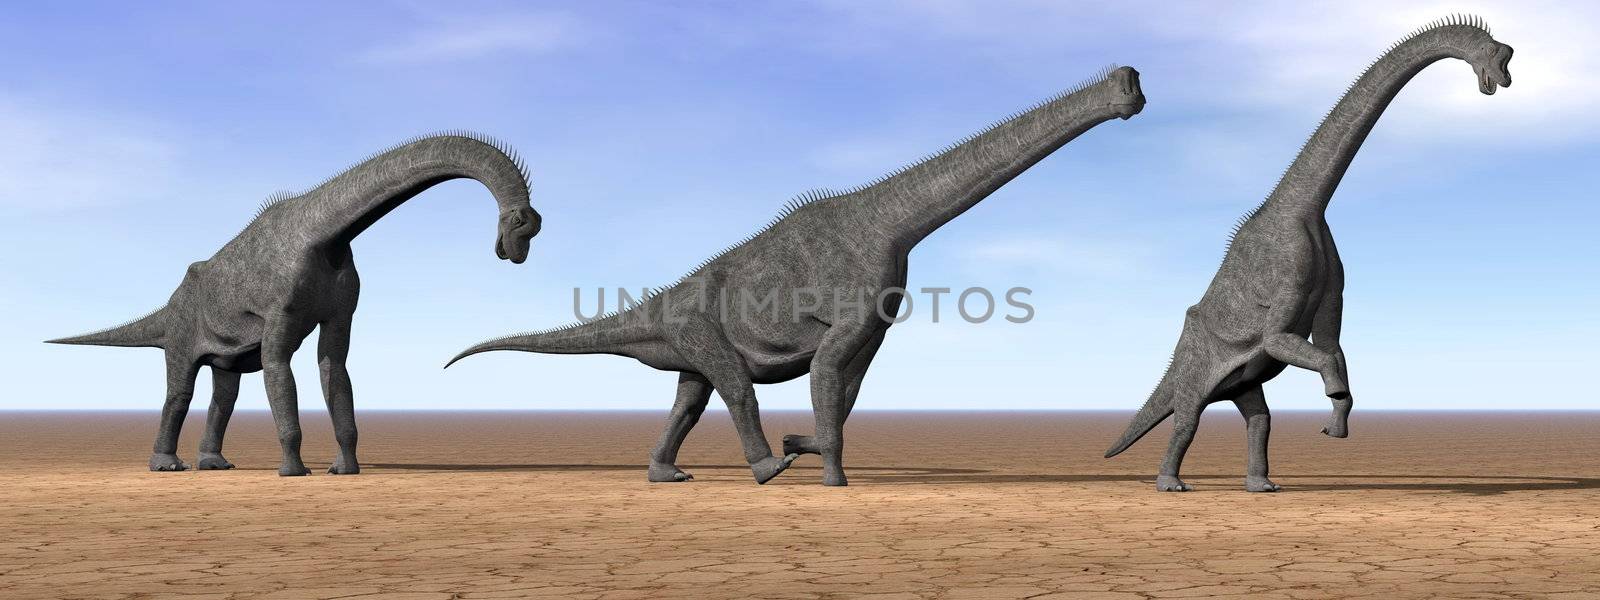 Brachiosaurus dinosaurs in the desert - 3D render by Elenaphotos21